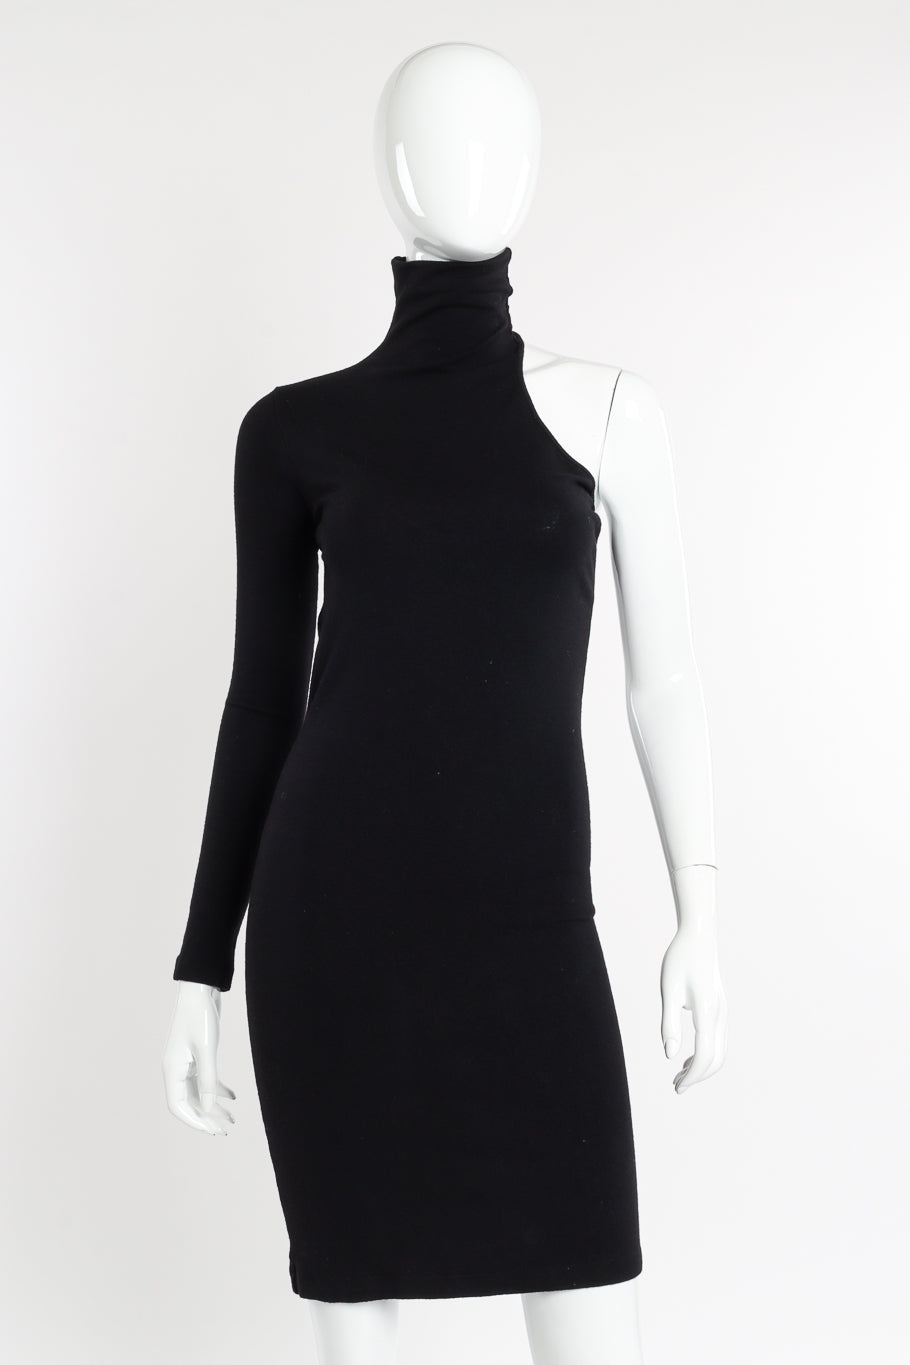 One-Shoulder Cutout Dress by Plein Sud on mannequin @recessla